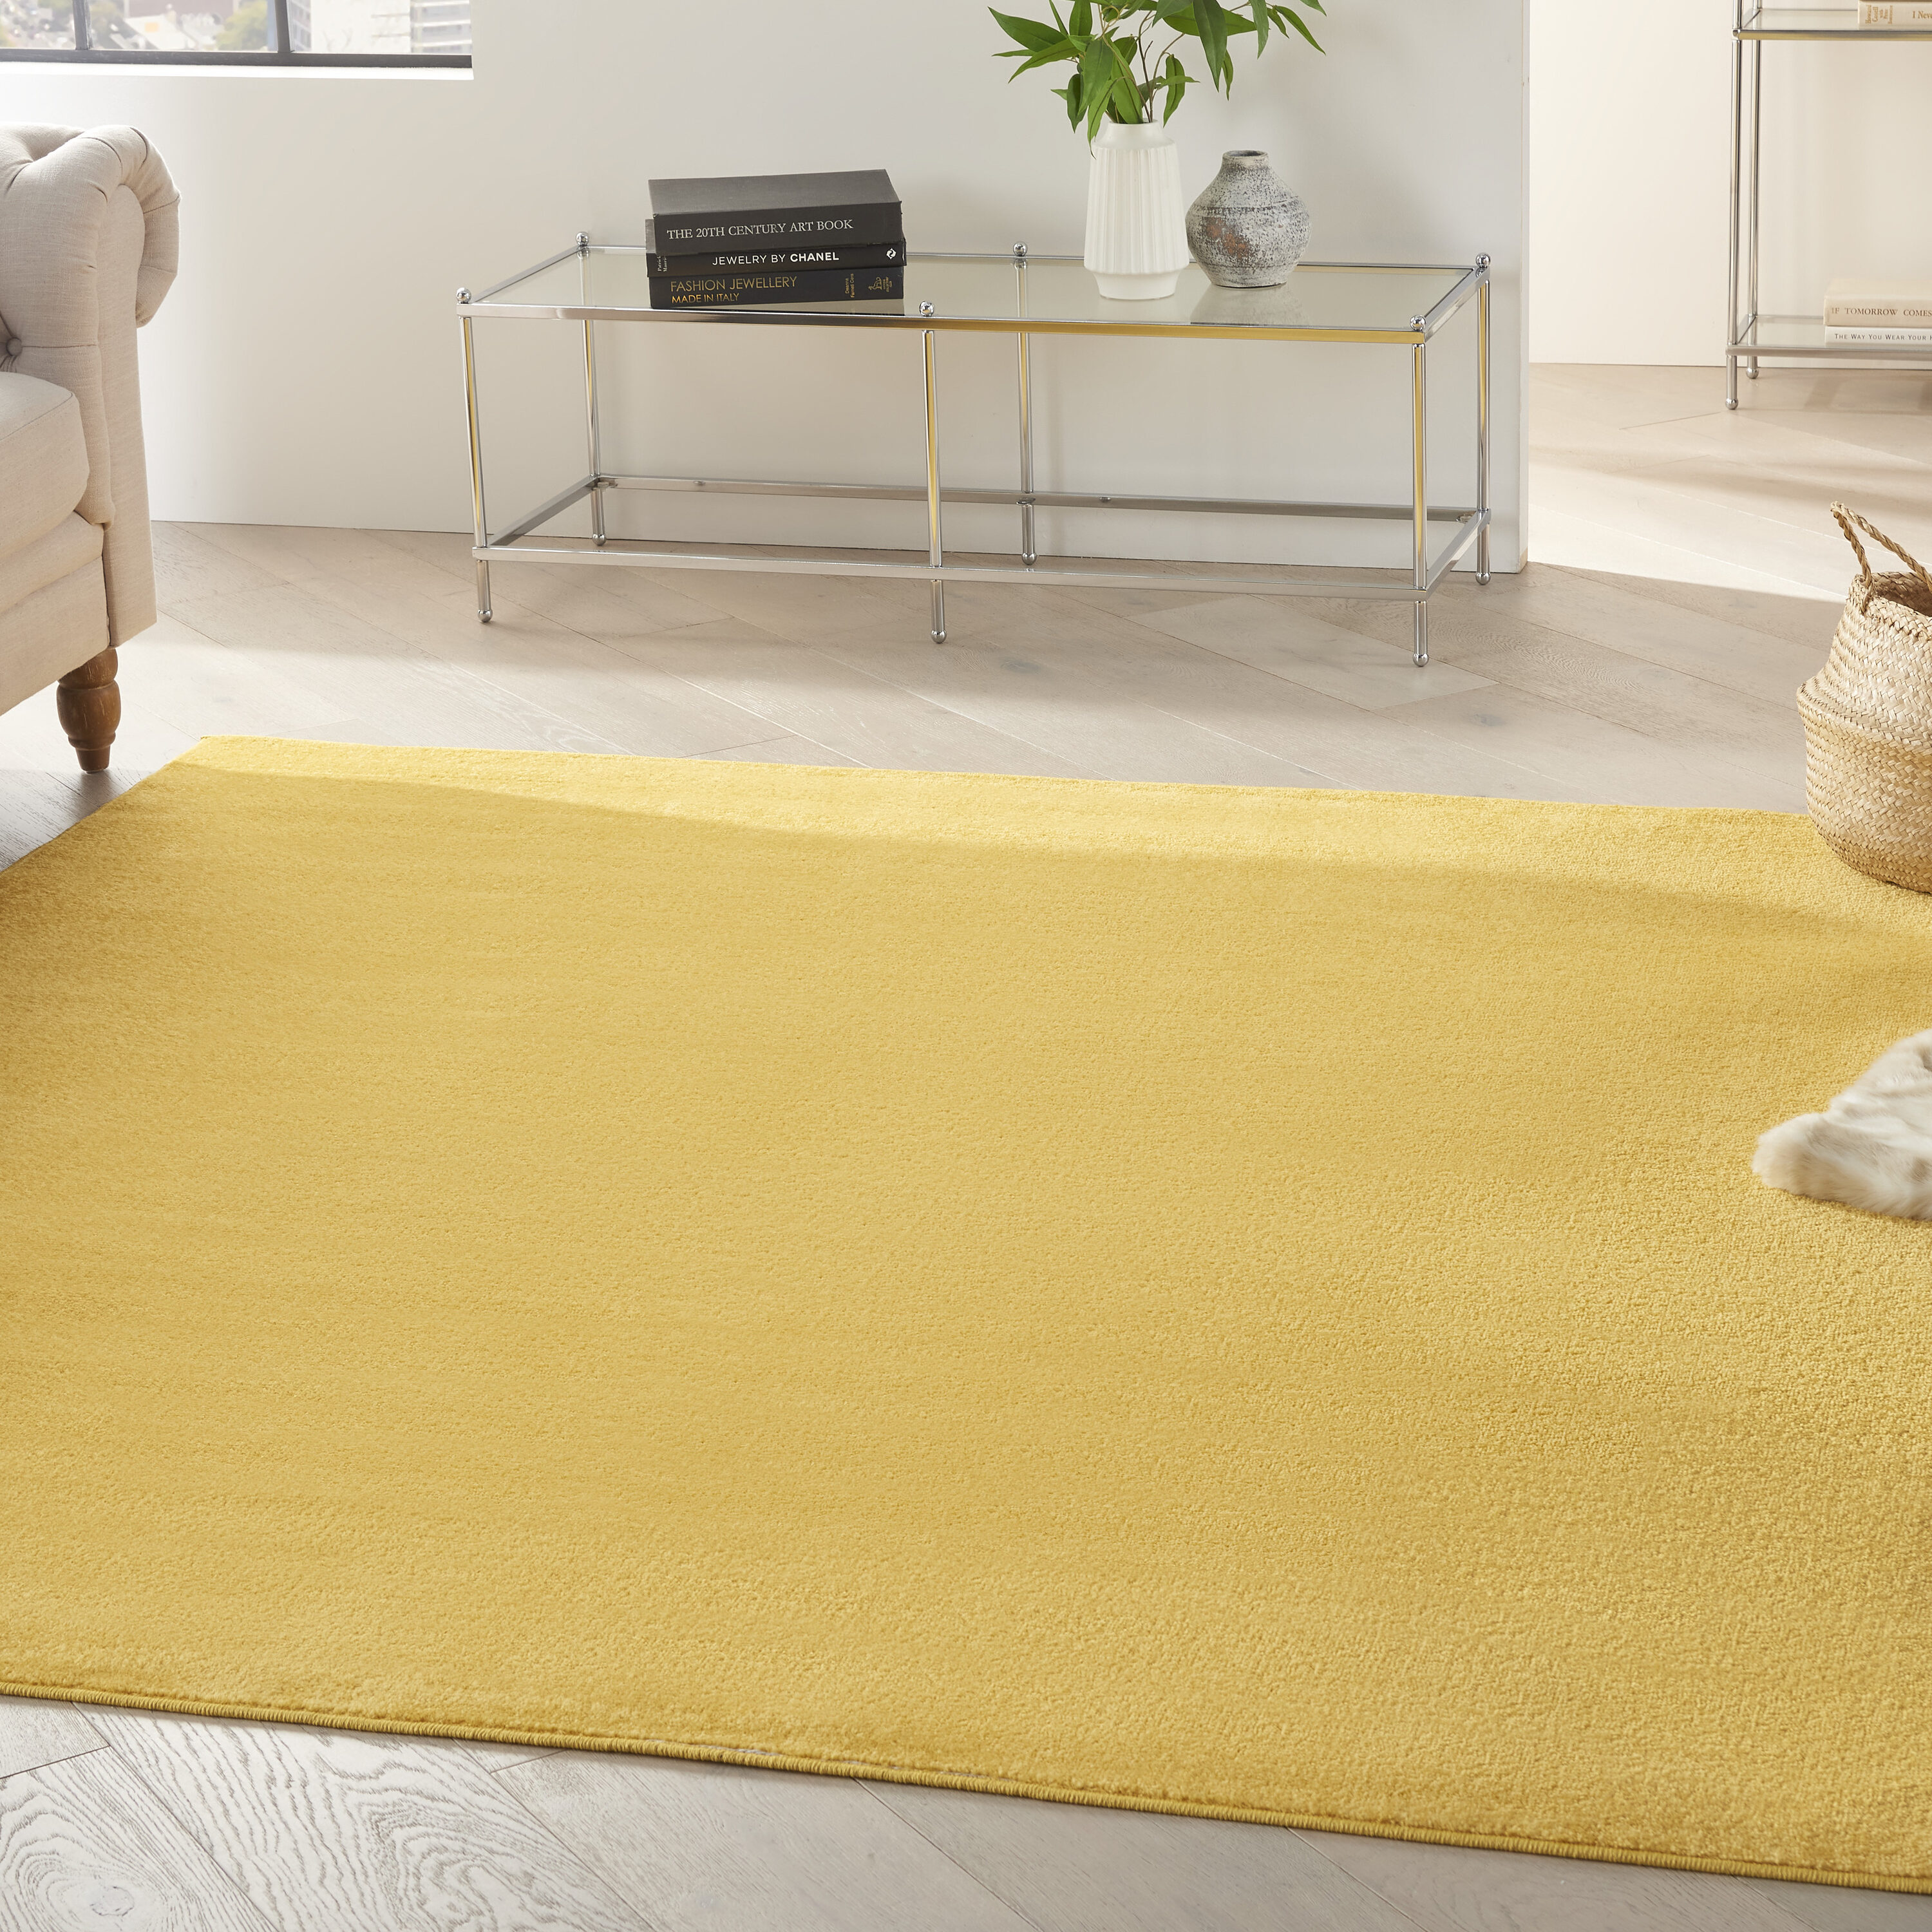 Doormat Layering Rug, Cream and Mustard Pattern Area Rug, Yellow